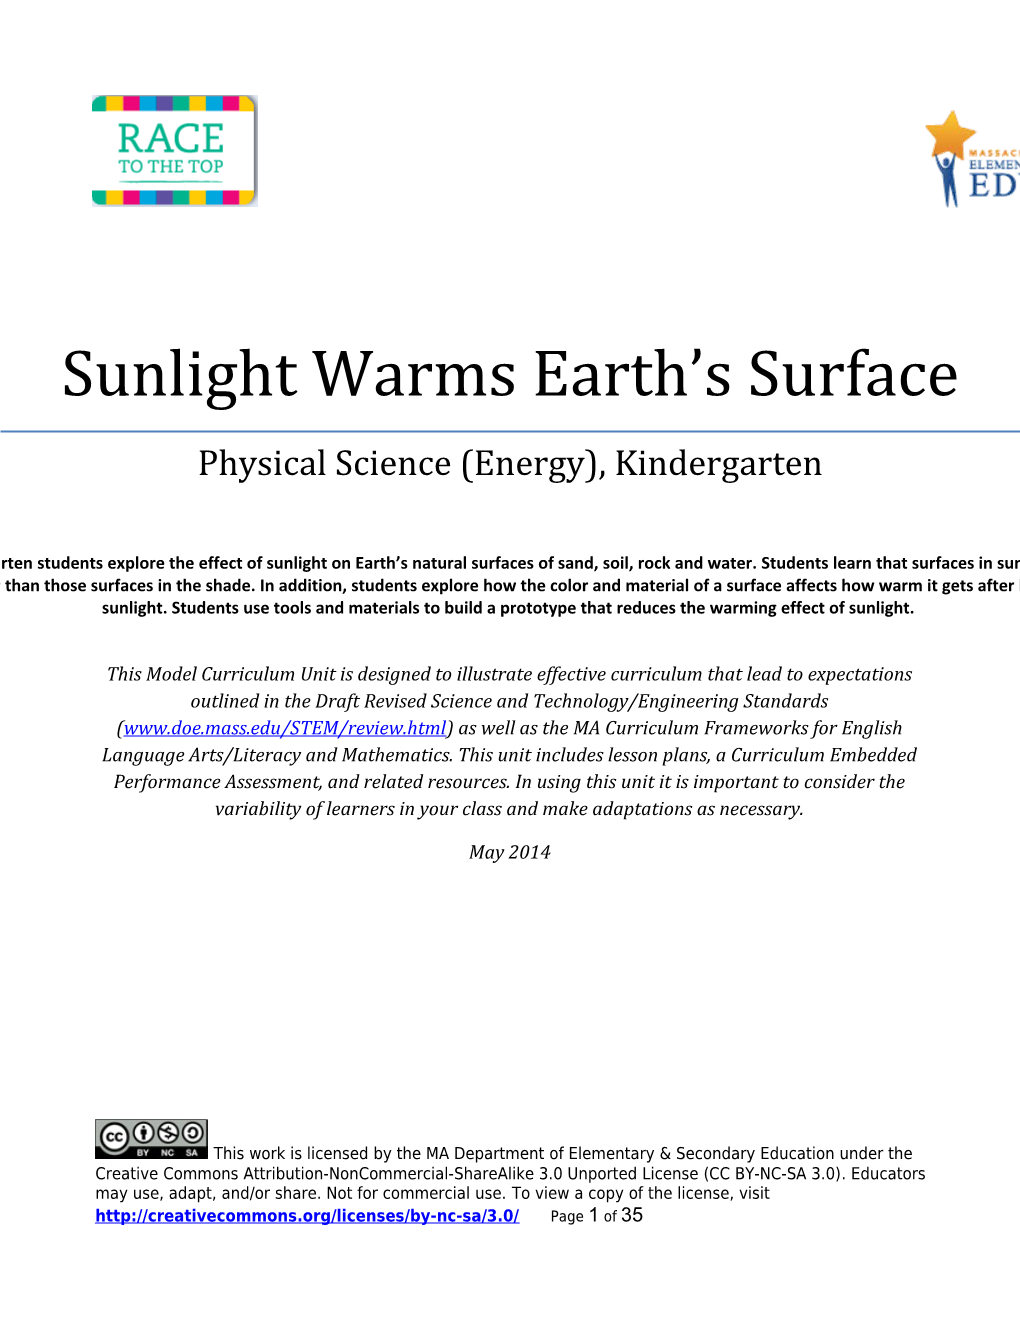 SCI Grade K Sunlight Warms Earth's Surface - Model Curriculum Unit